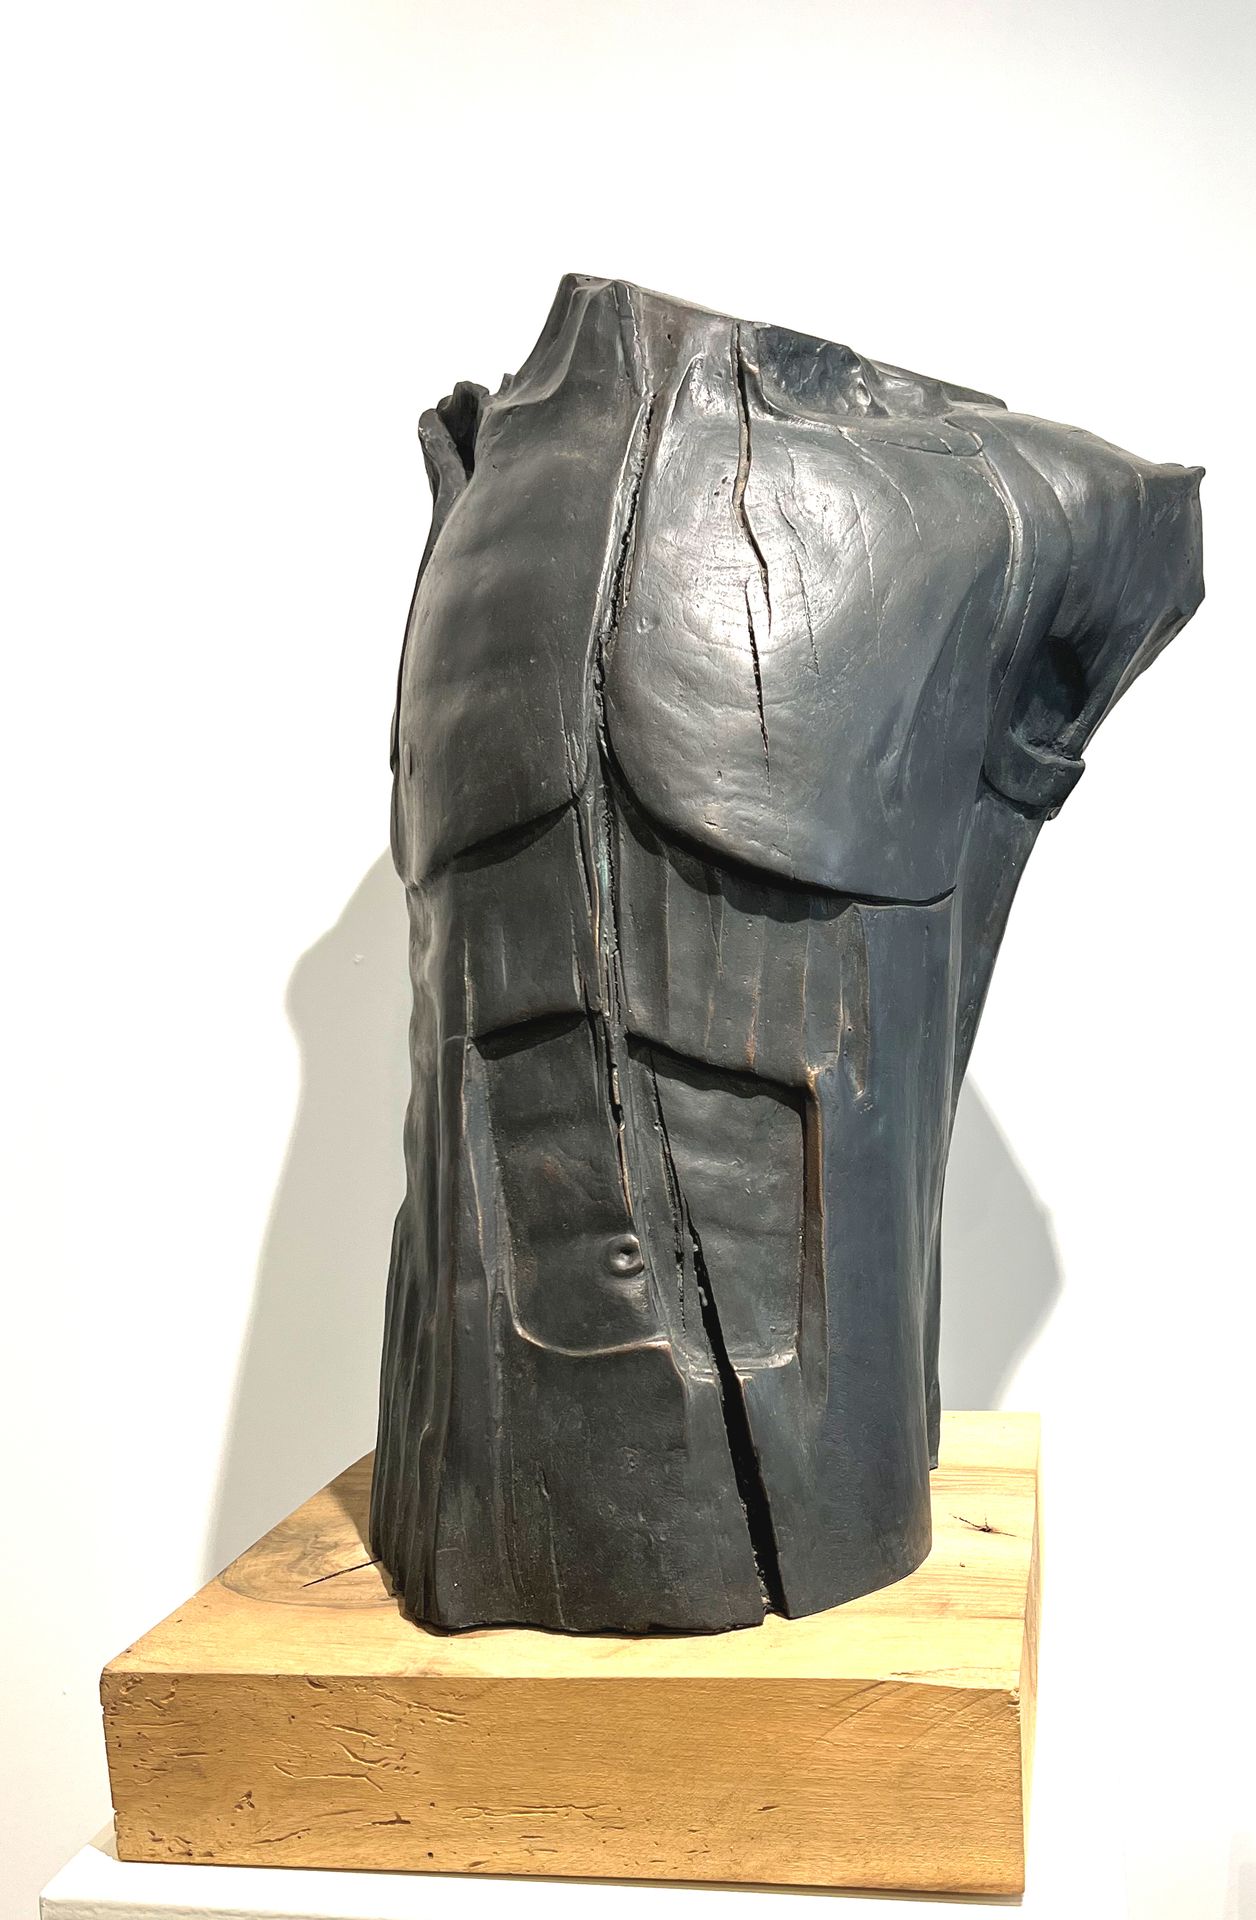 Null Christian ODDOUX (1947-2022), "Gladiador", 1995, bronce patinado, H: 58 cm
&hellip;